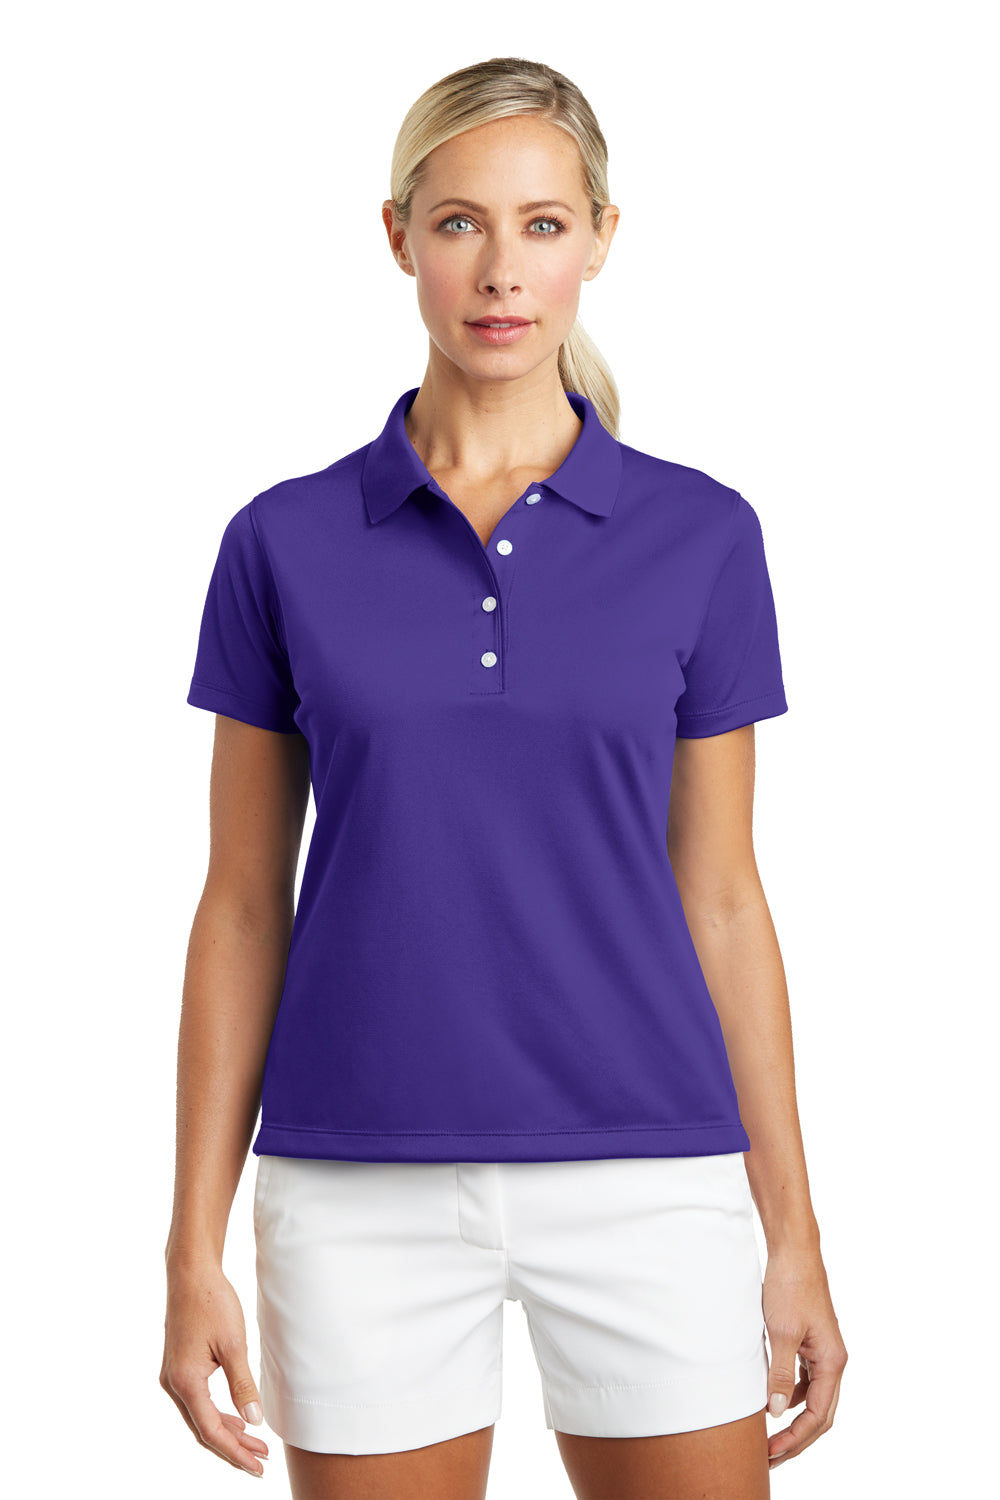 Nike 203697 Womens Tech Basic Dri-Fit Moisture Wicking Short Sleeve Polo Shirt Varsity Purple Model Front